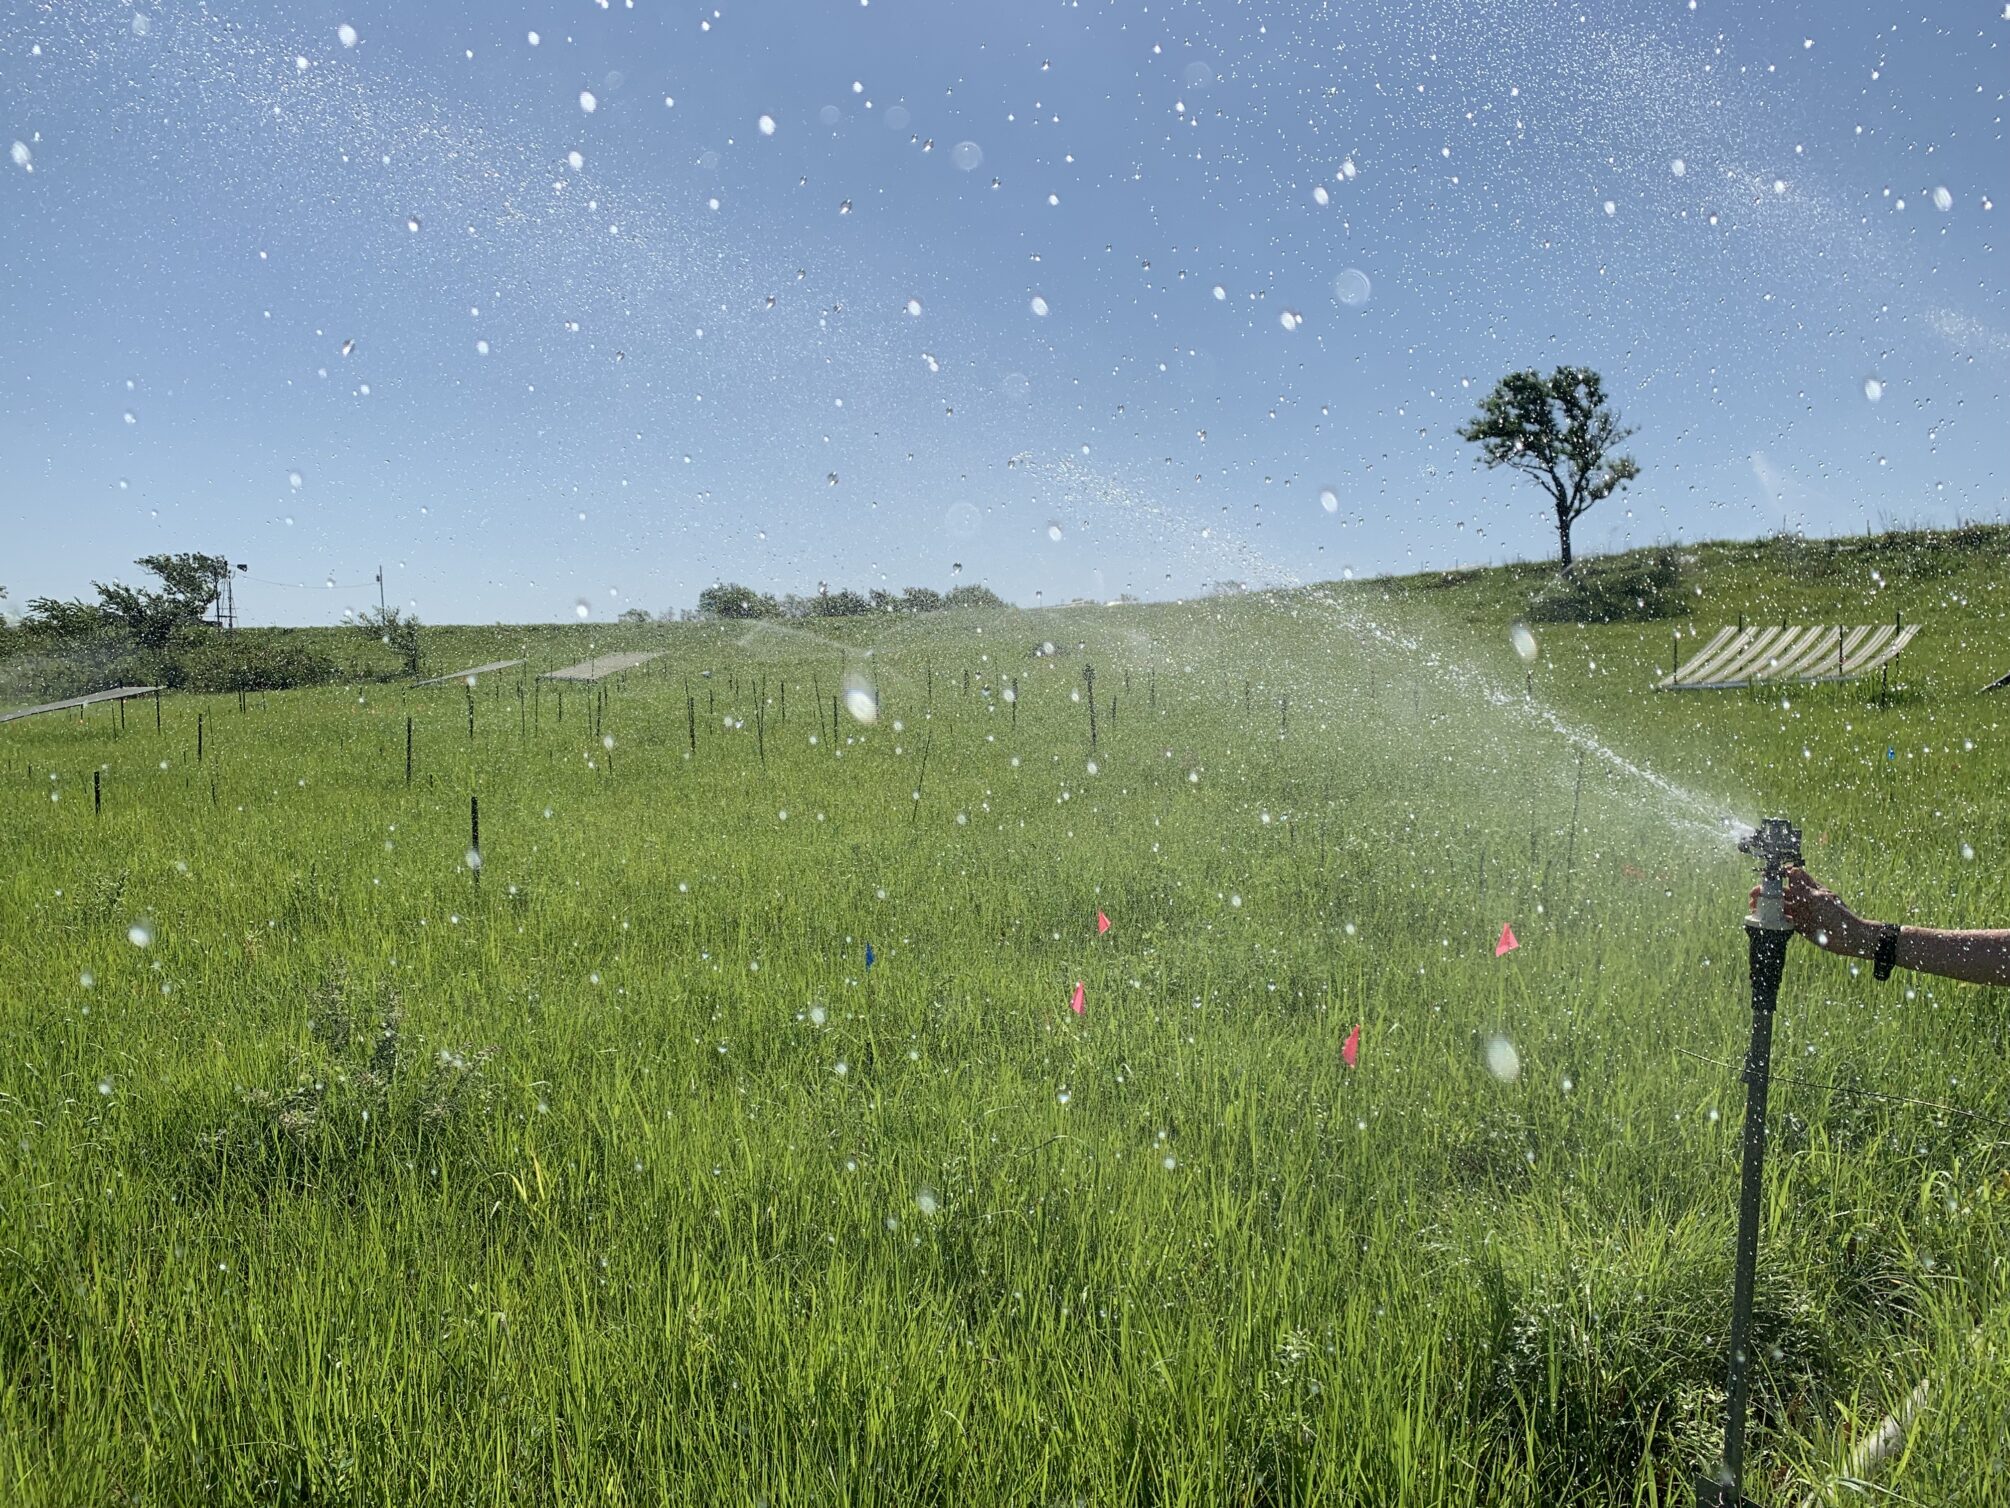 A sprinkler rises above the green tallgrass prairie, spraying water everywhere.